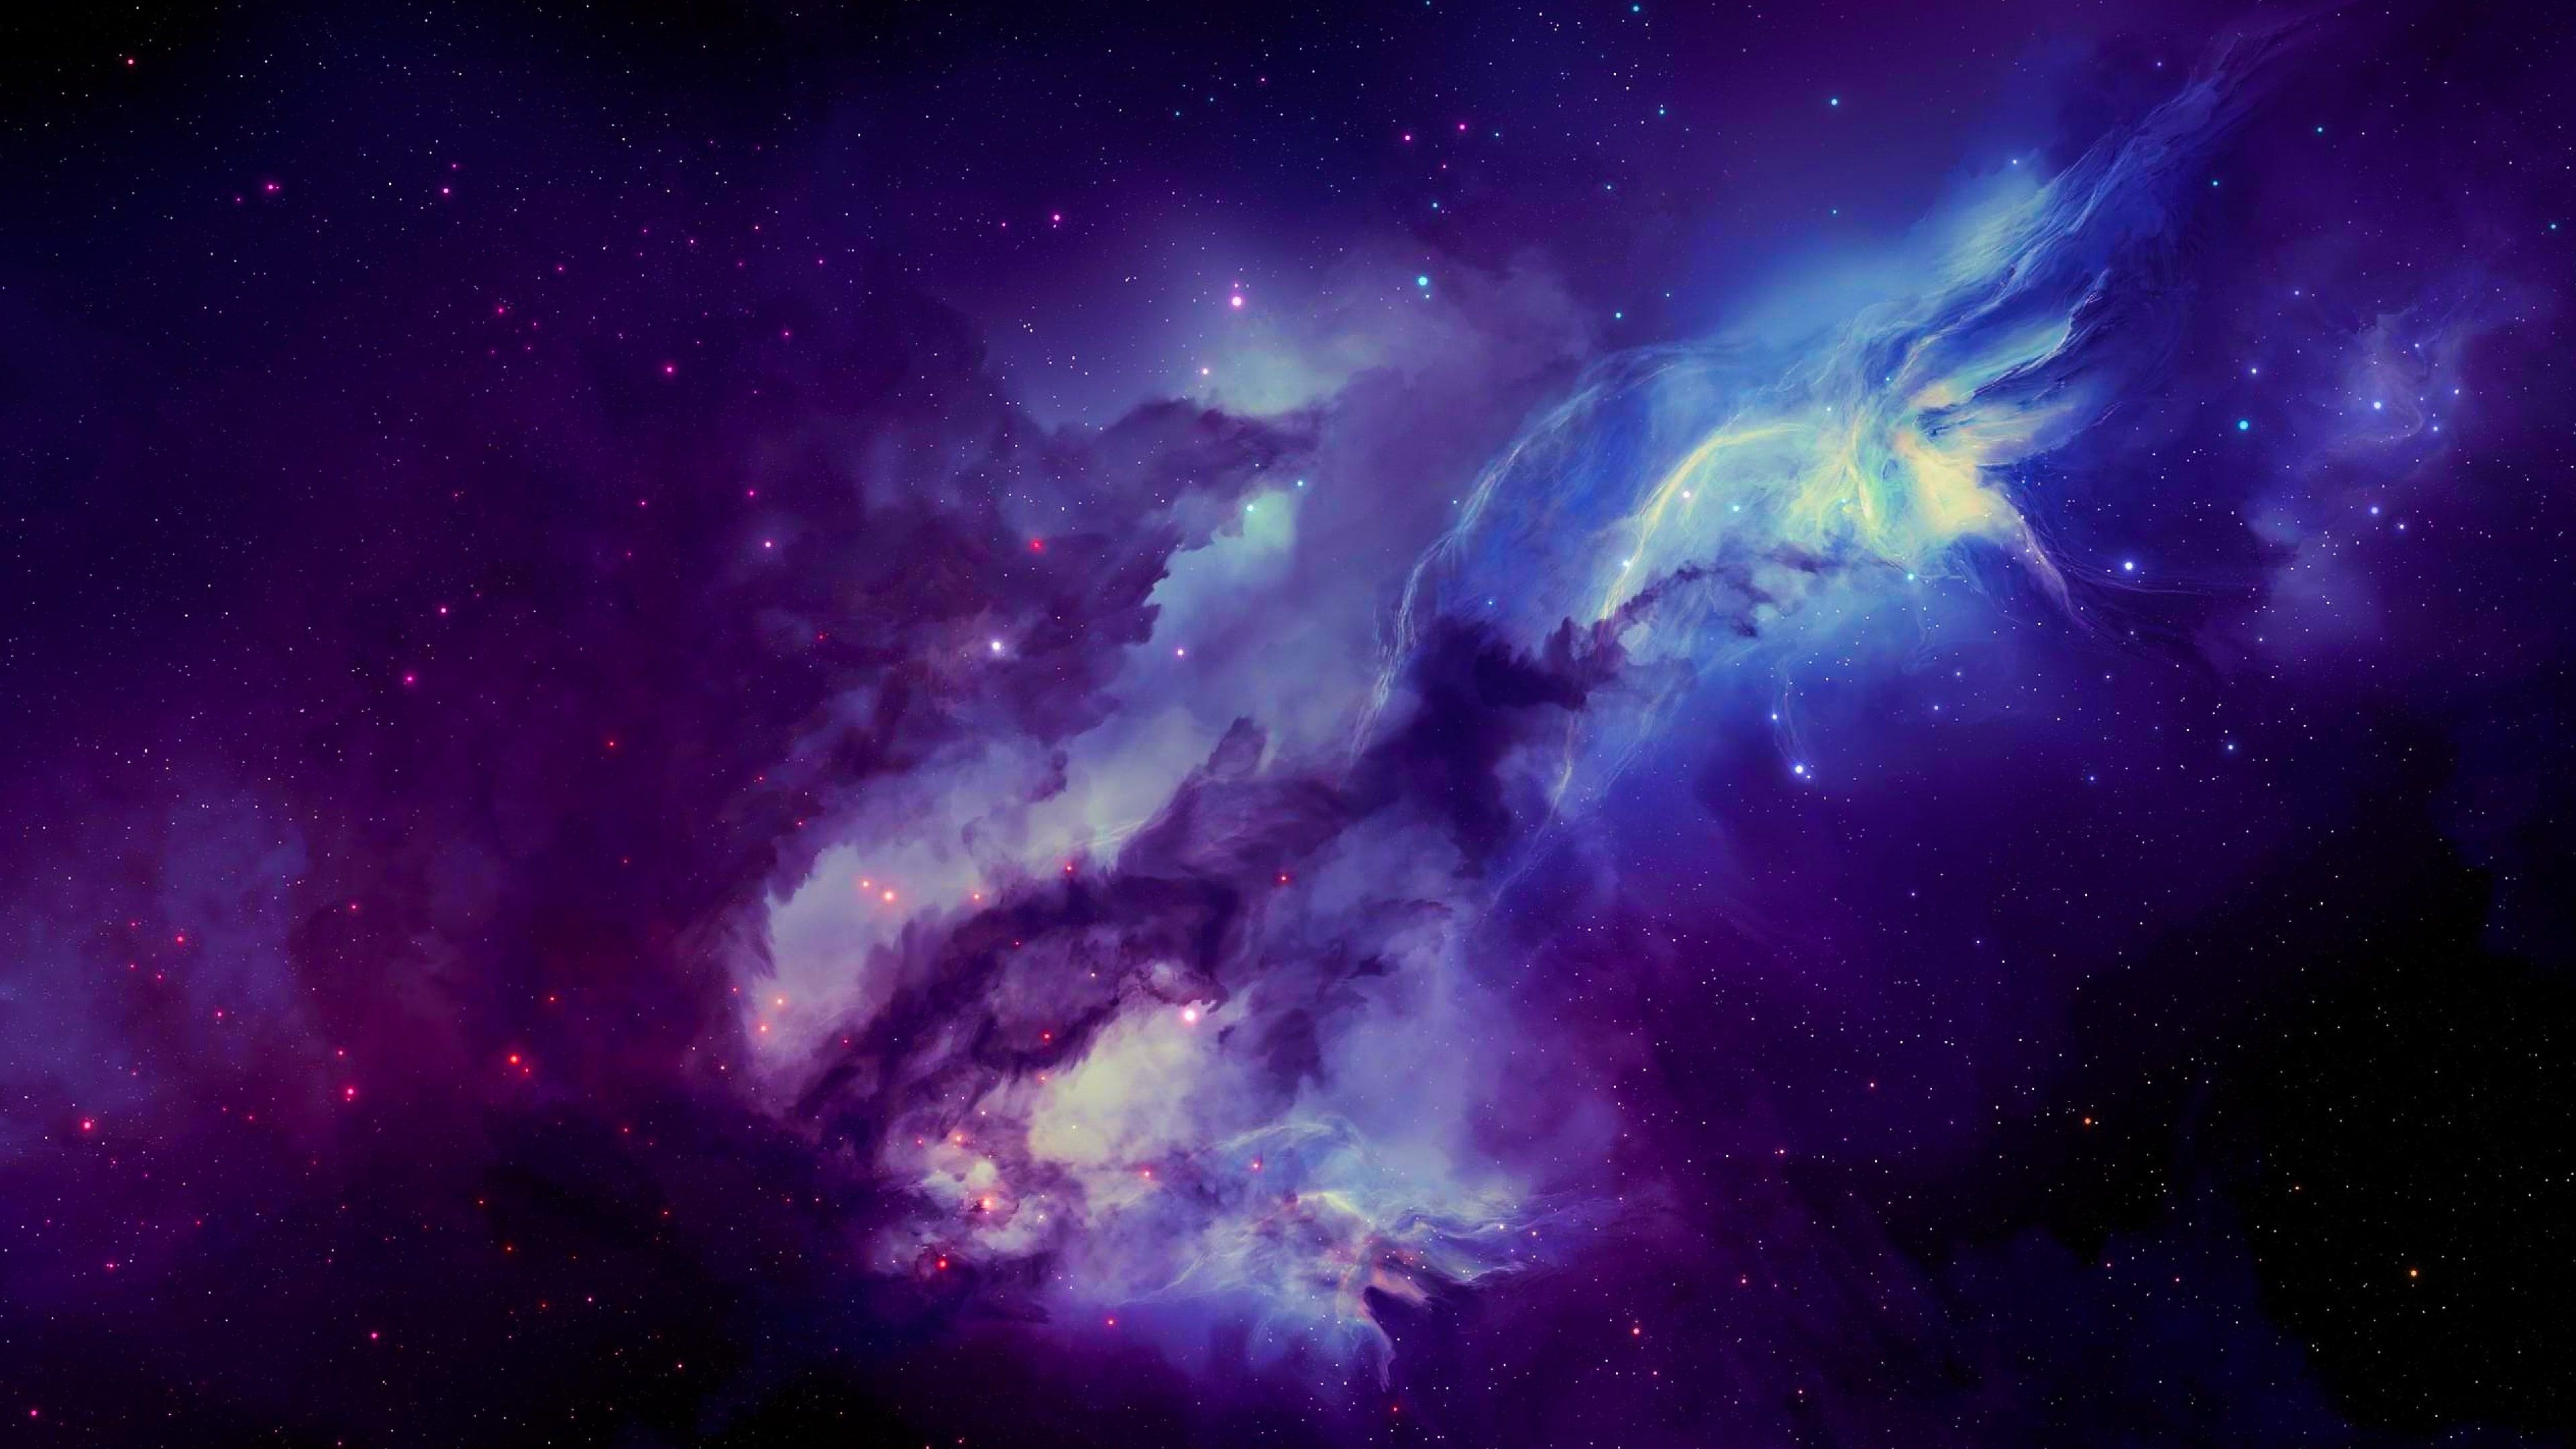 nebula #sky #universe #galaxy #astronomy #space #purple K #wallpaper #hdwallpaper #desktop. Nebula, Wallpaper, Galaxy hd